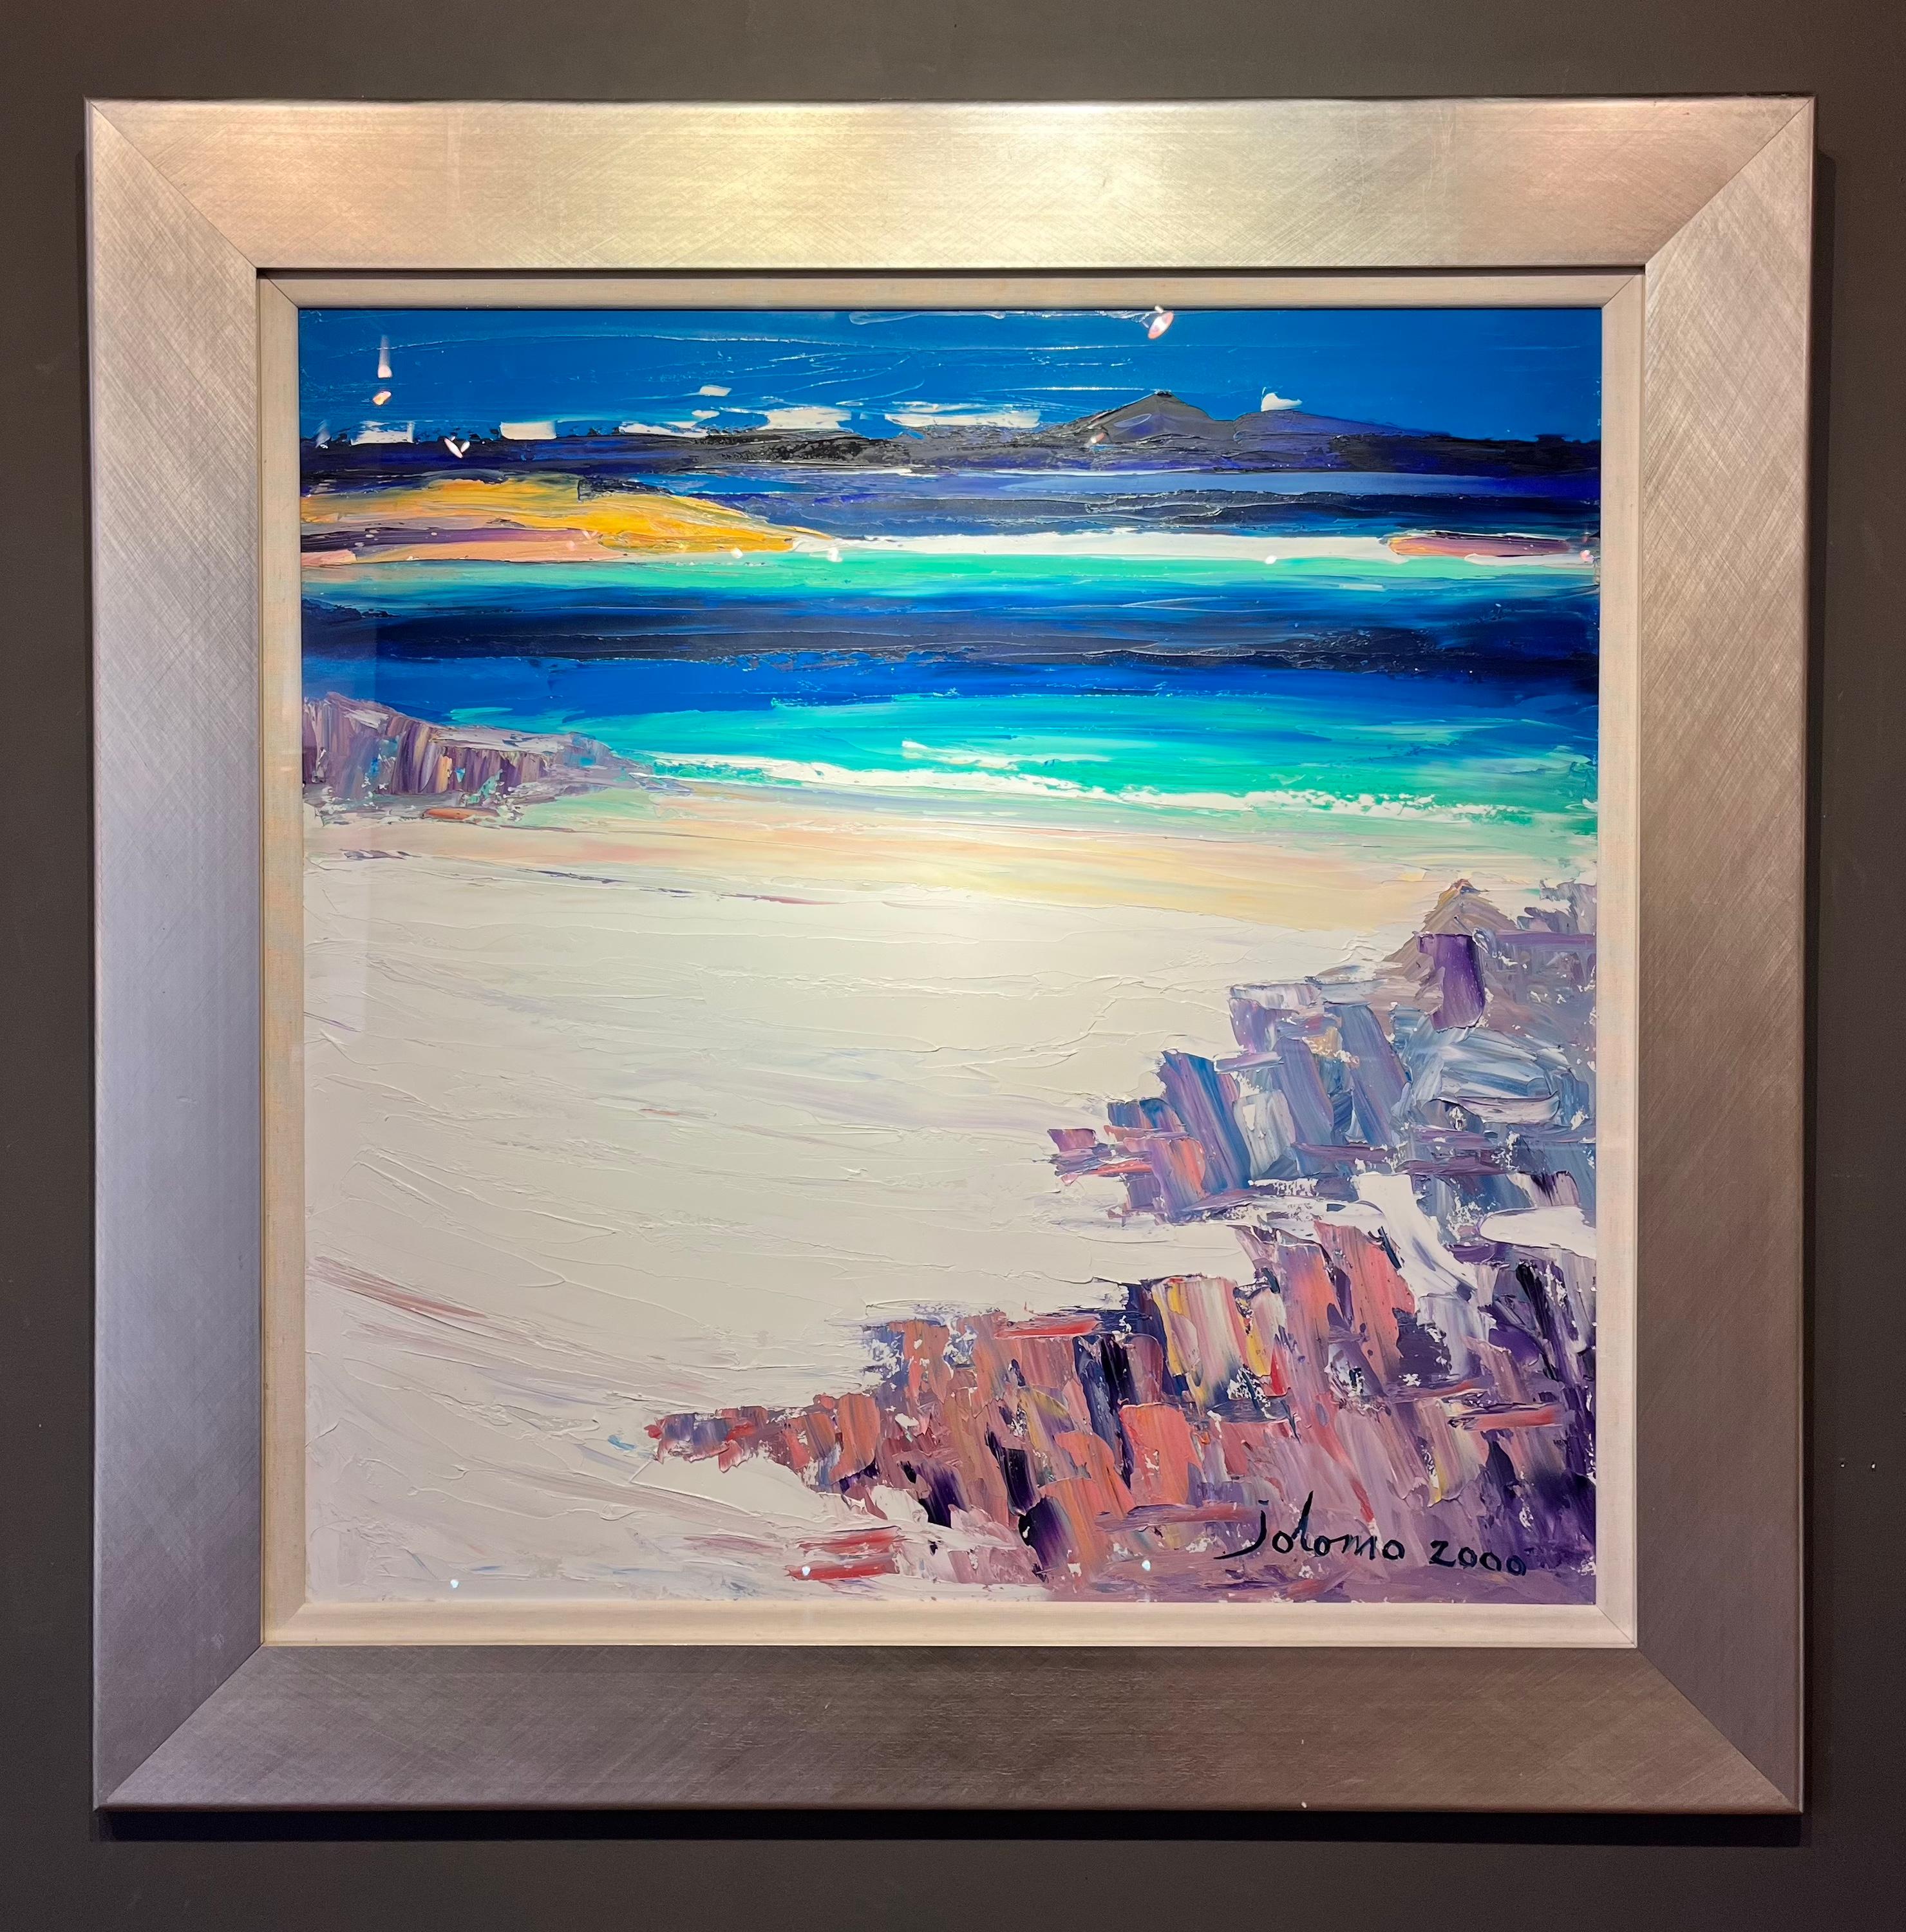 John Lowrie Morrison Landscape Painting - 'White Beach Iona' Scottish seascape painting of a beach, blue sea, rocks